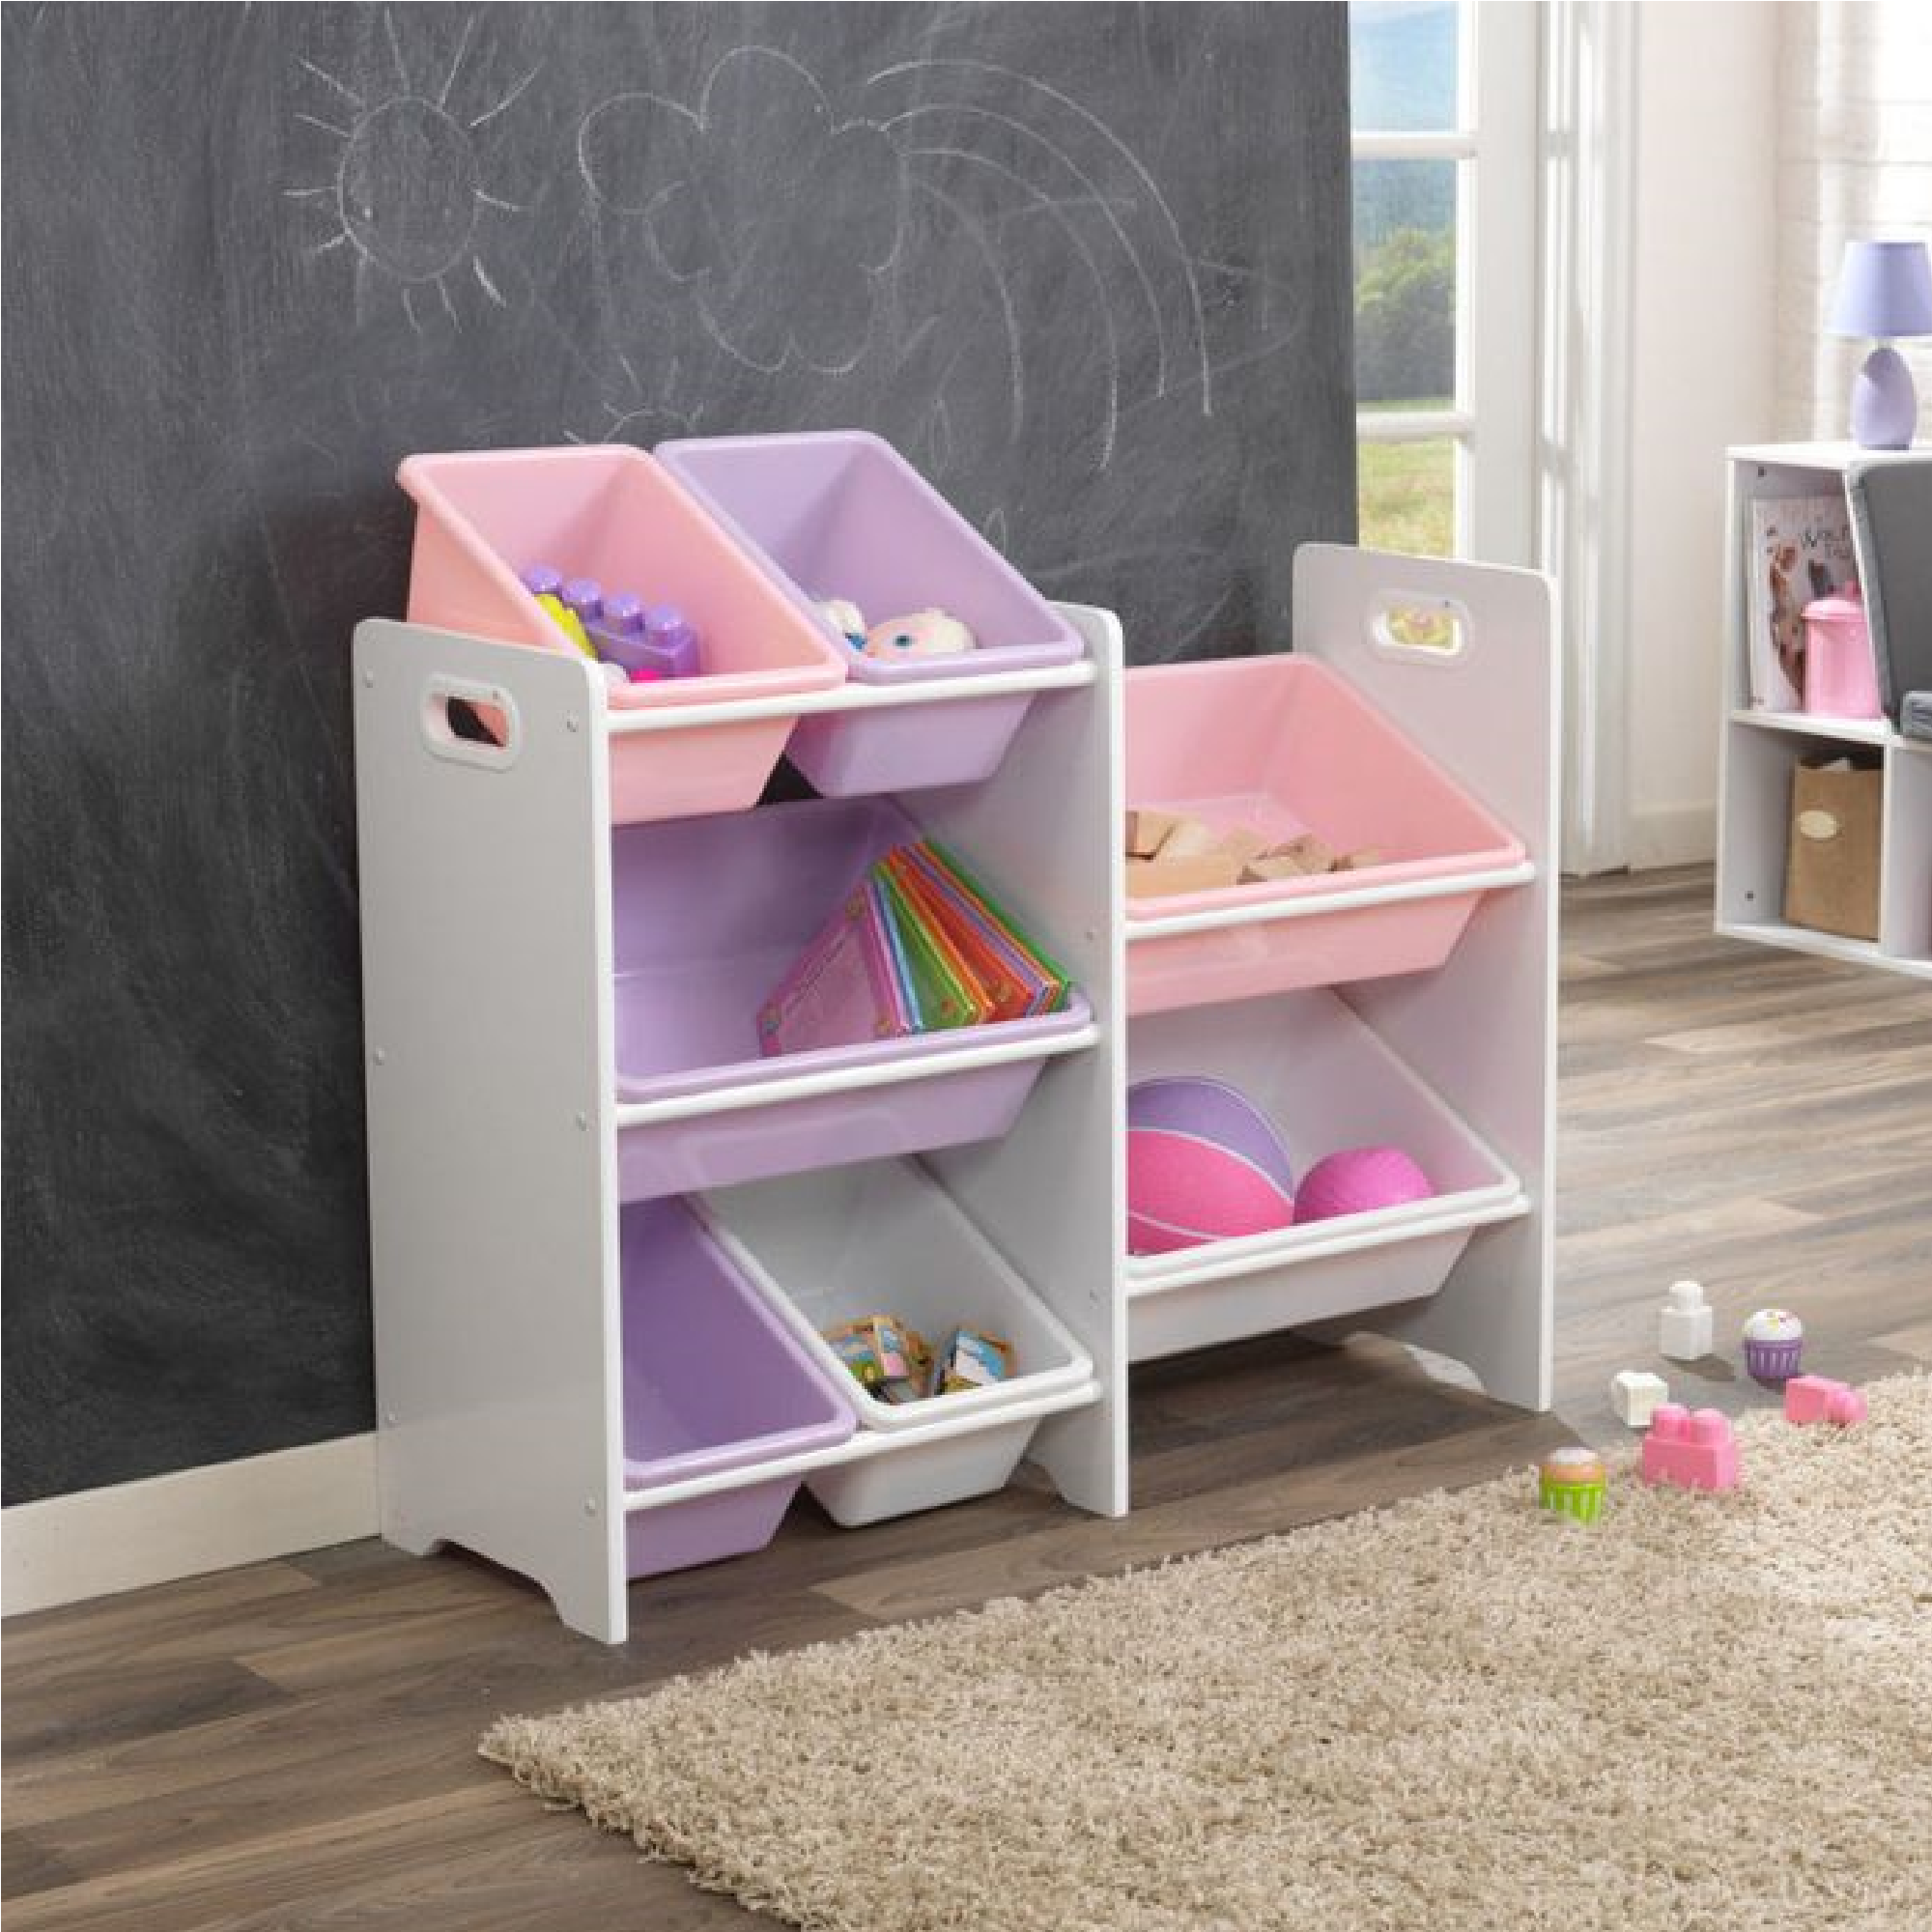 Kidkraft 7 Bin Toy Storage Unit - White - Baby and Child Store